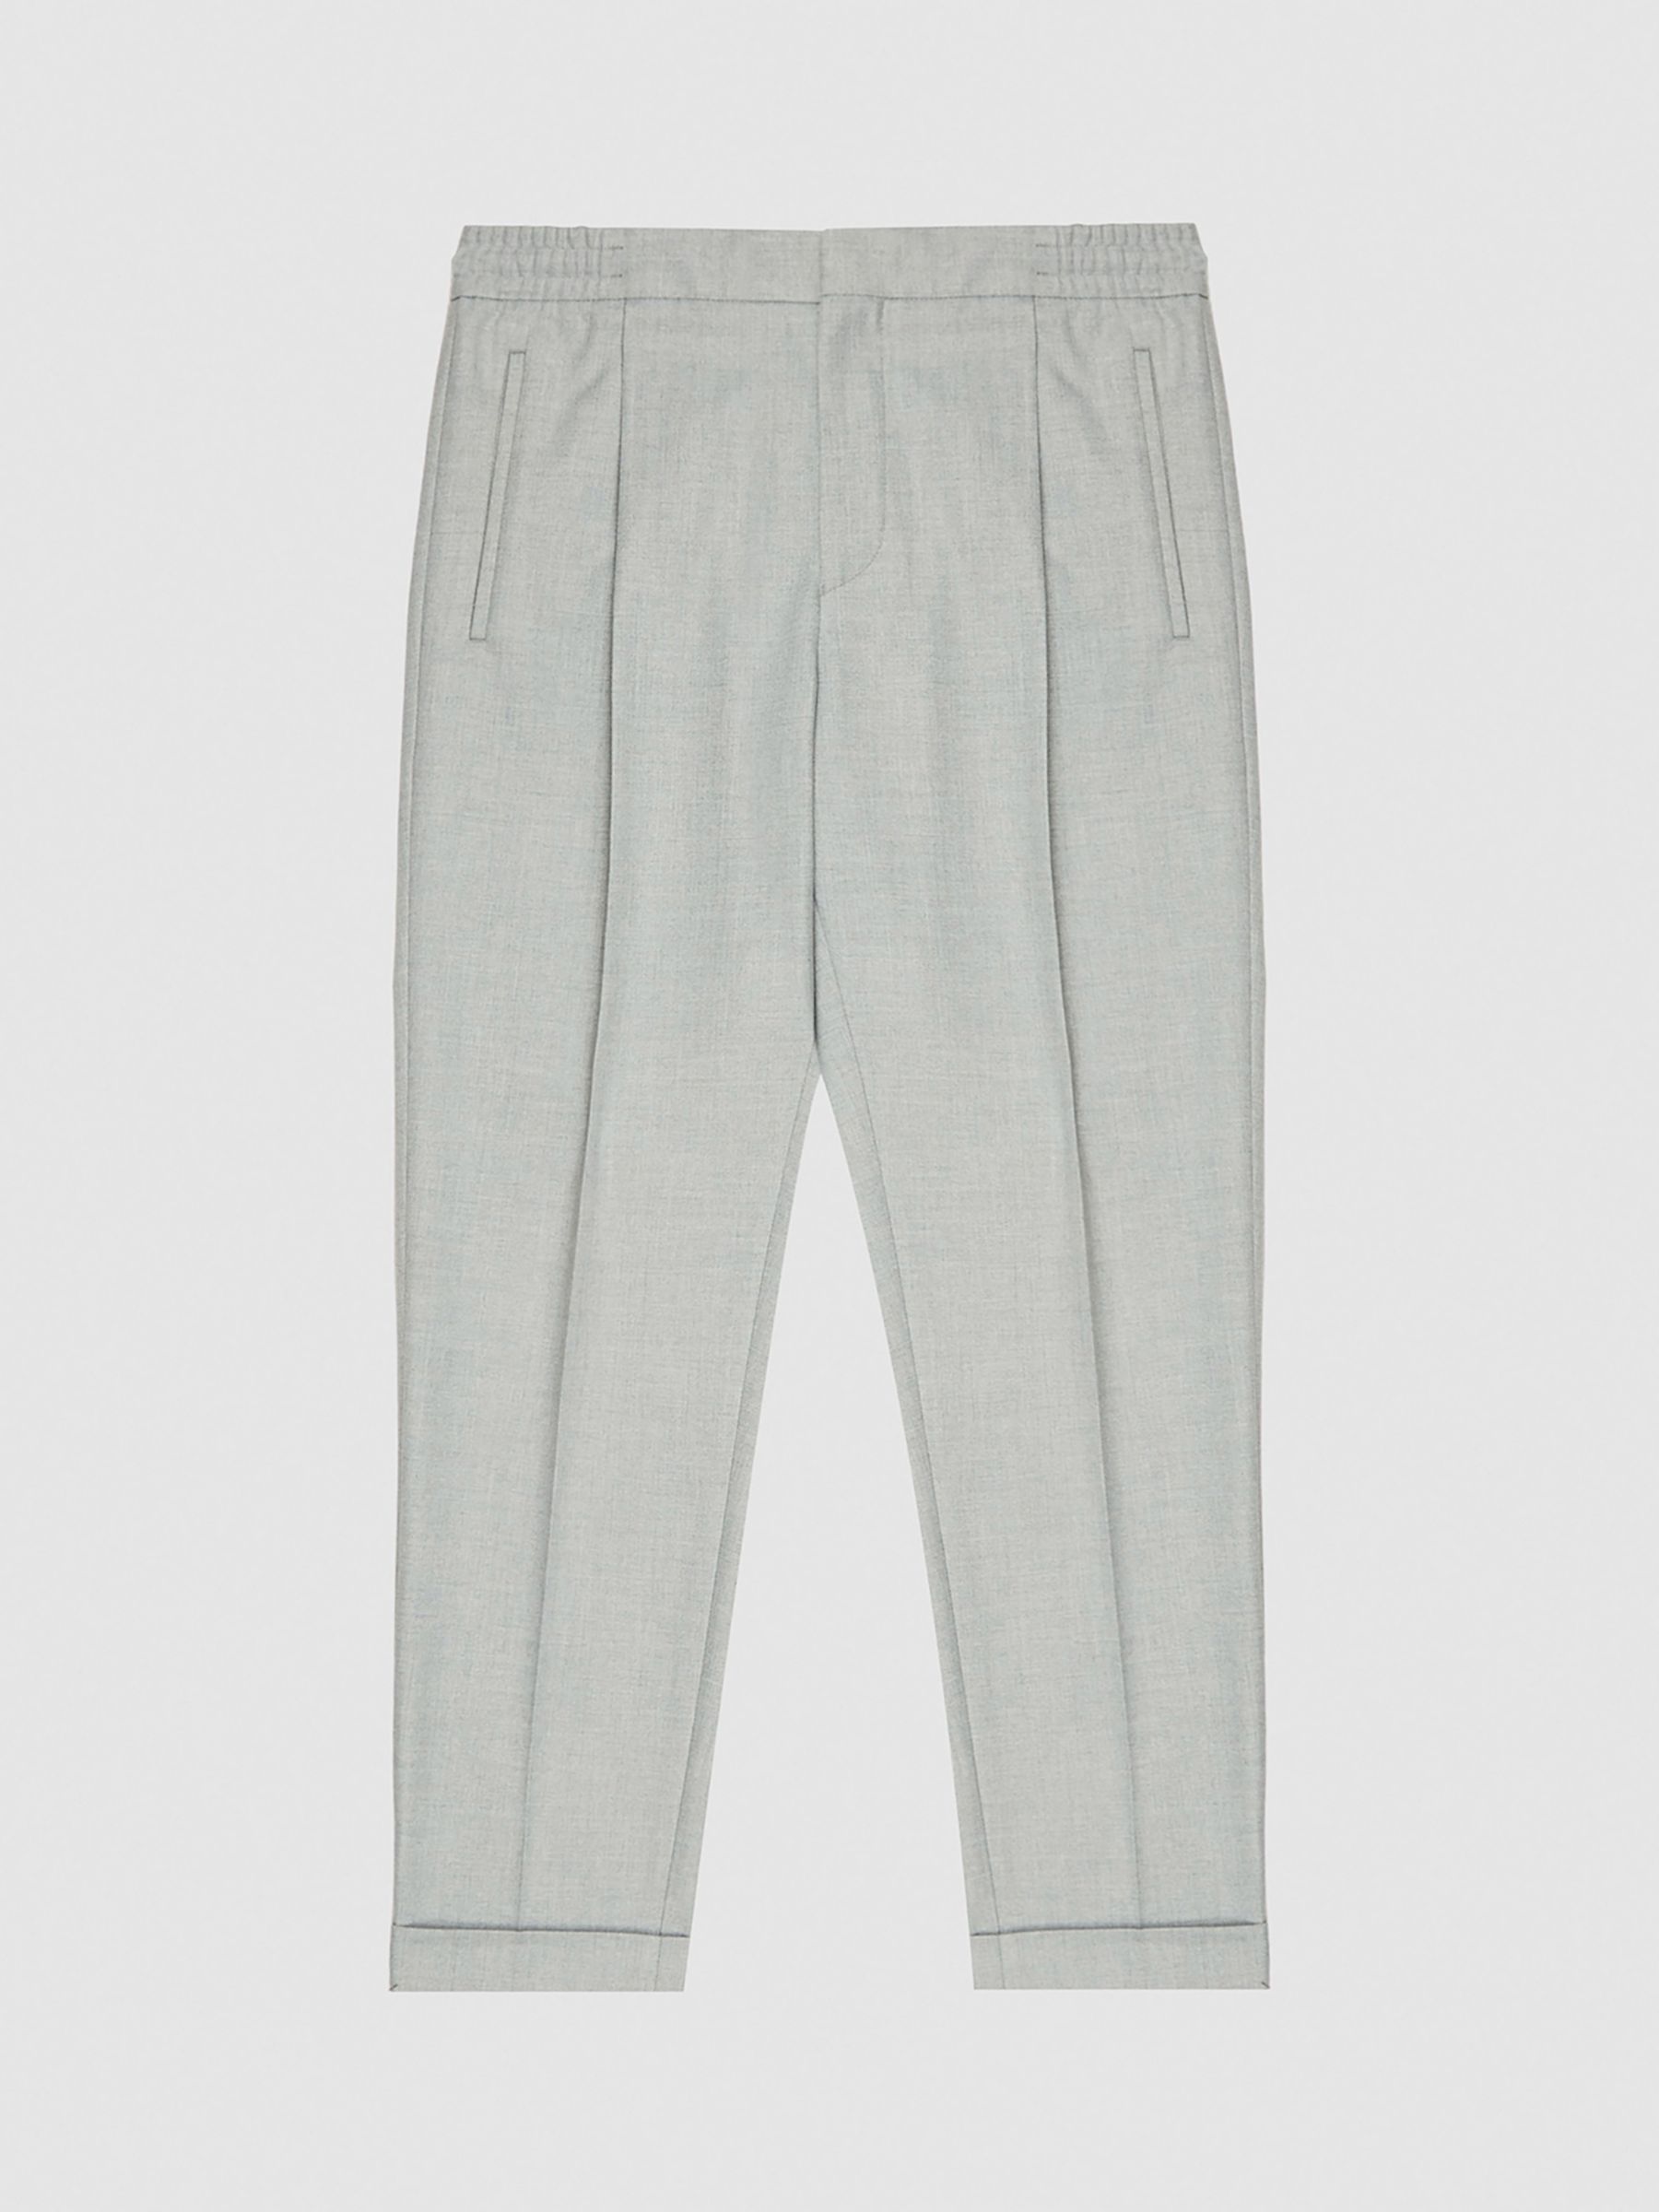 Reiss Brighton Pleated Slim Trousers, Soft Grey, 28R